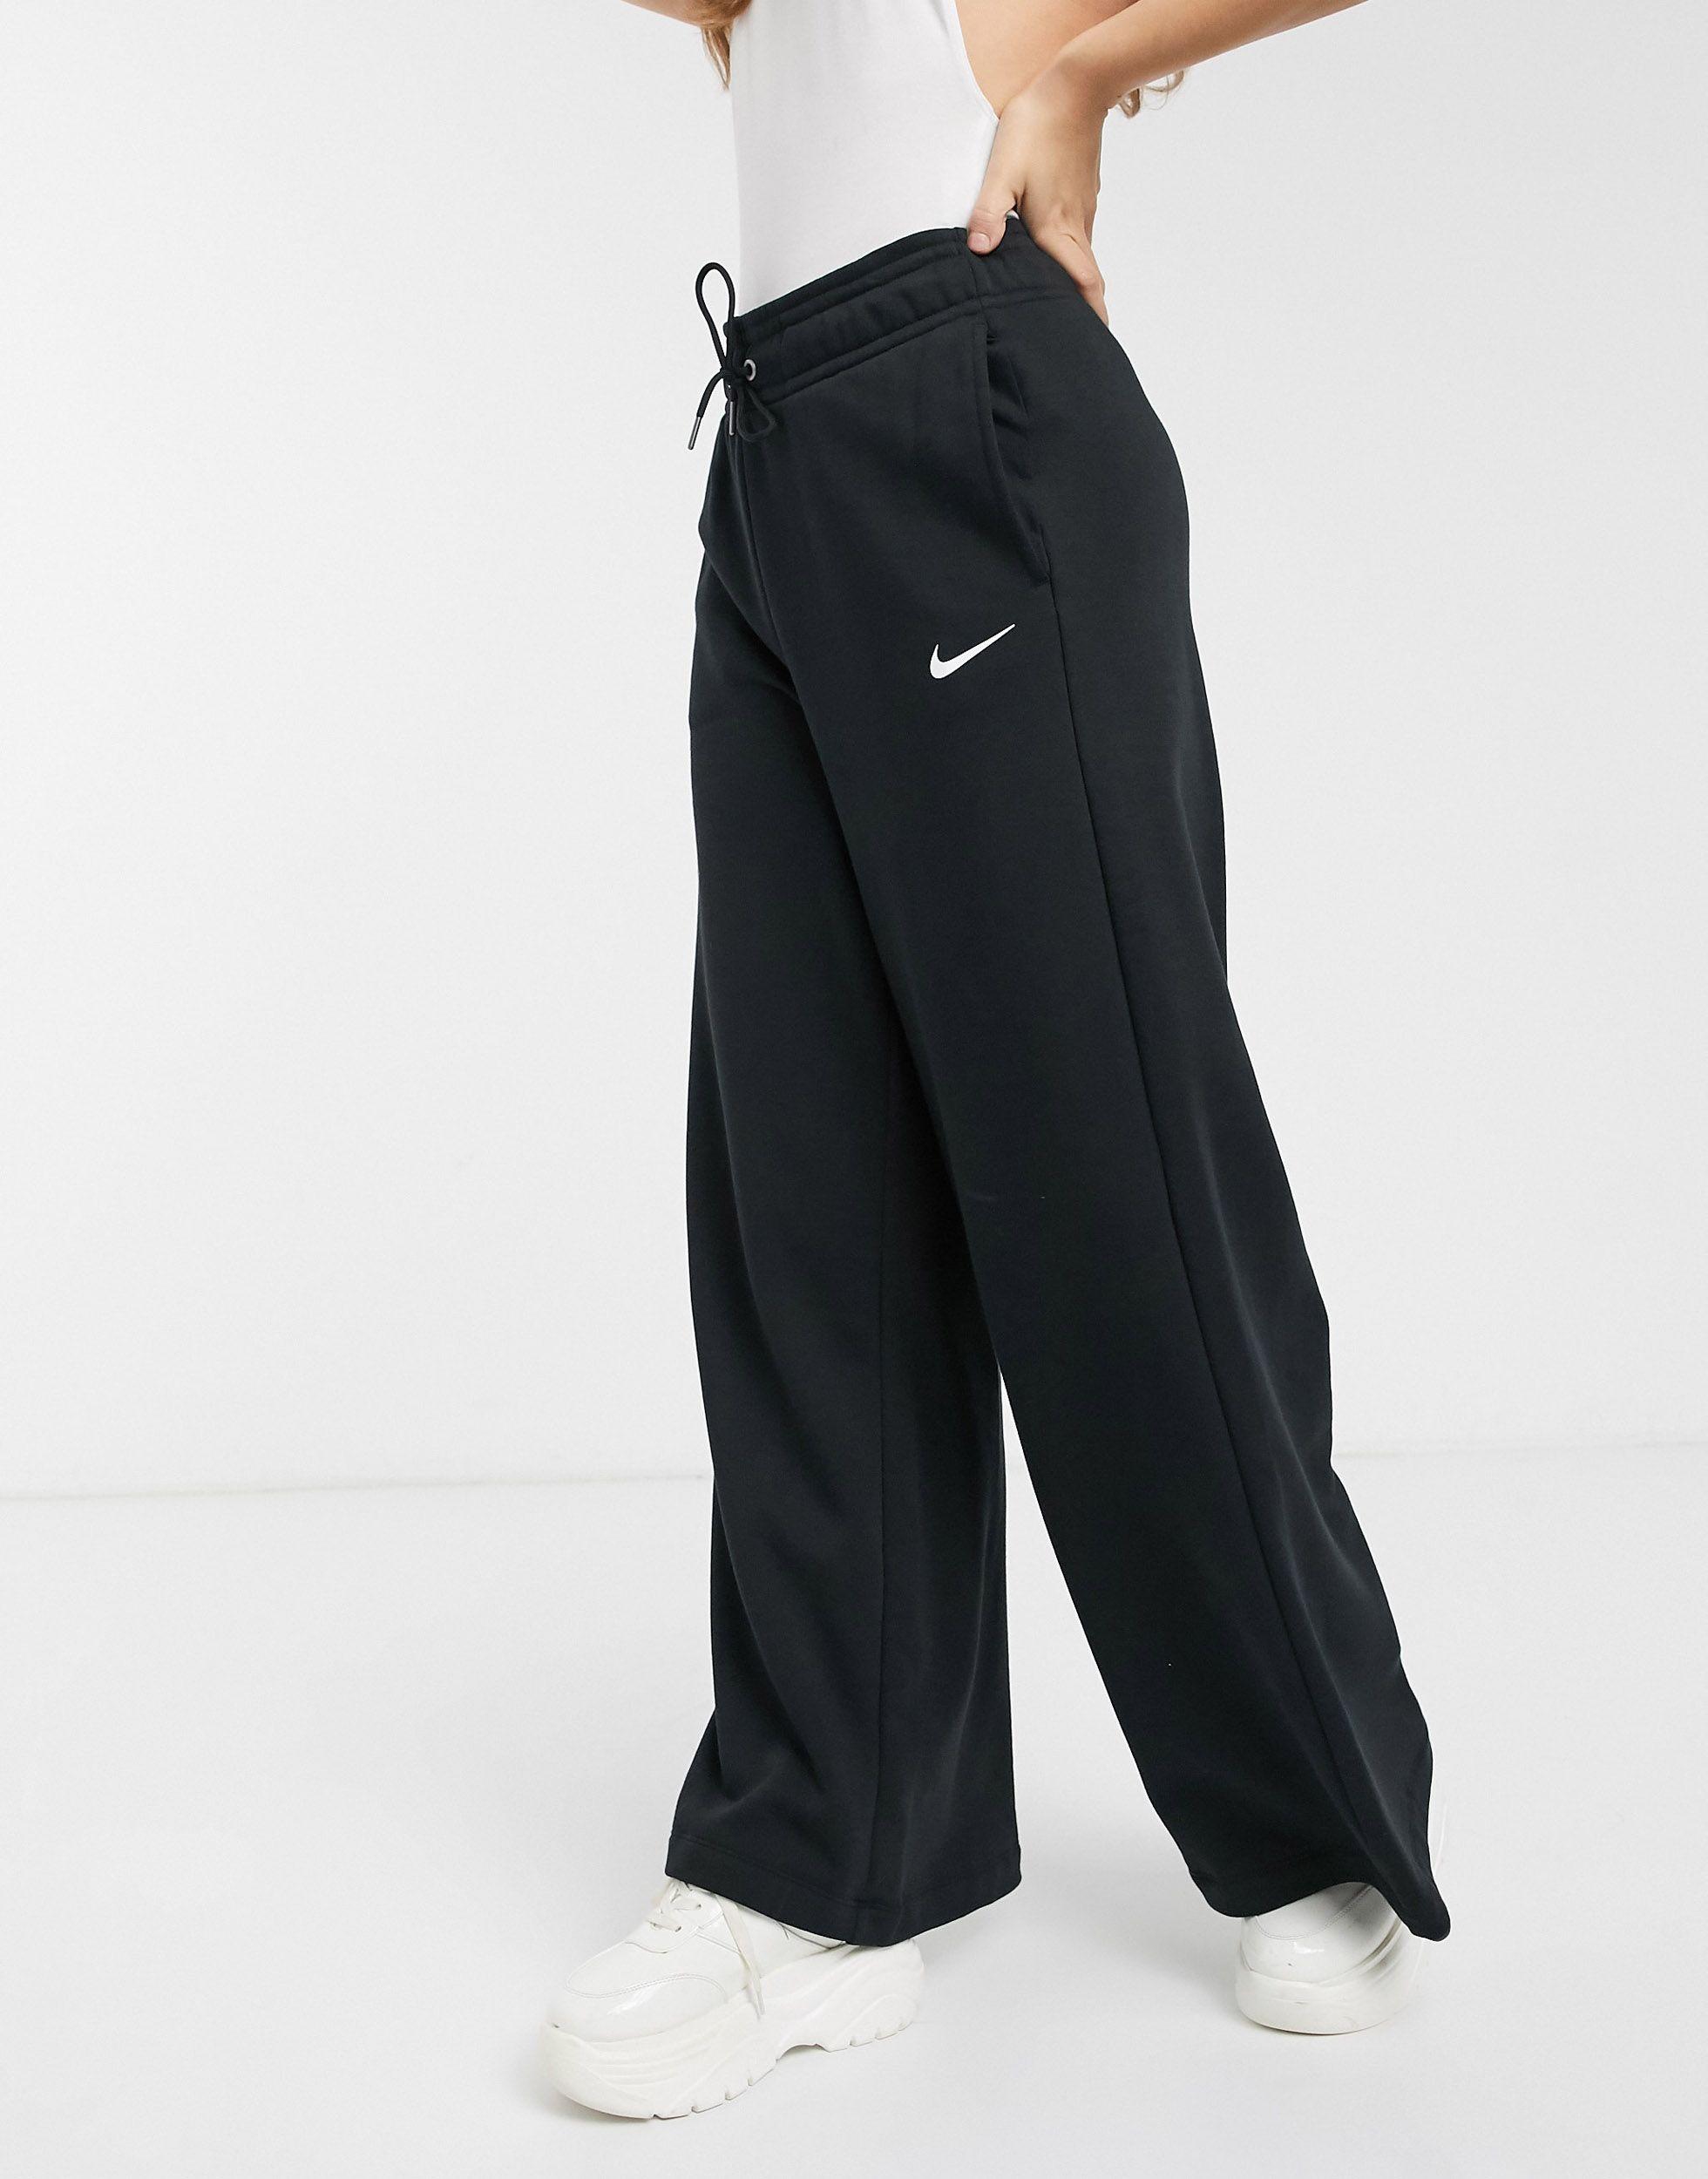 Higgins Serena bezelye  Nike Cotton Black Wide Leg High Waist joggers, Plain Pattern | Lyst